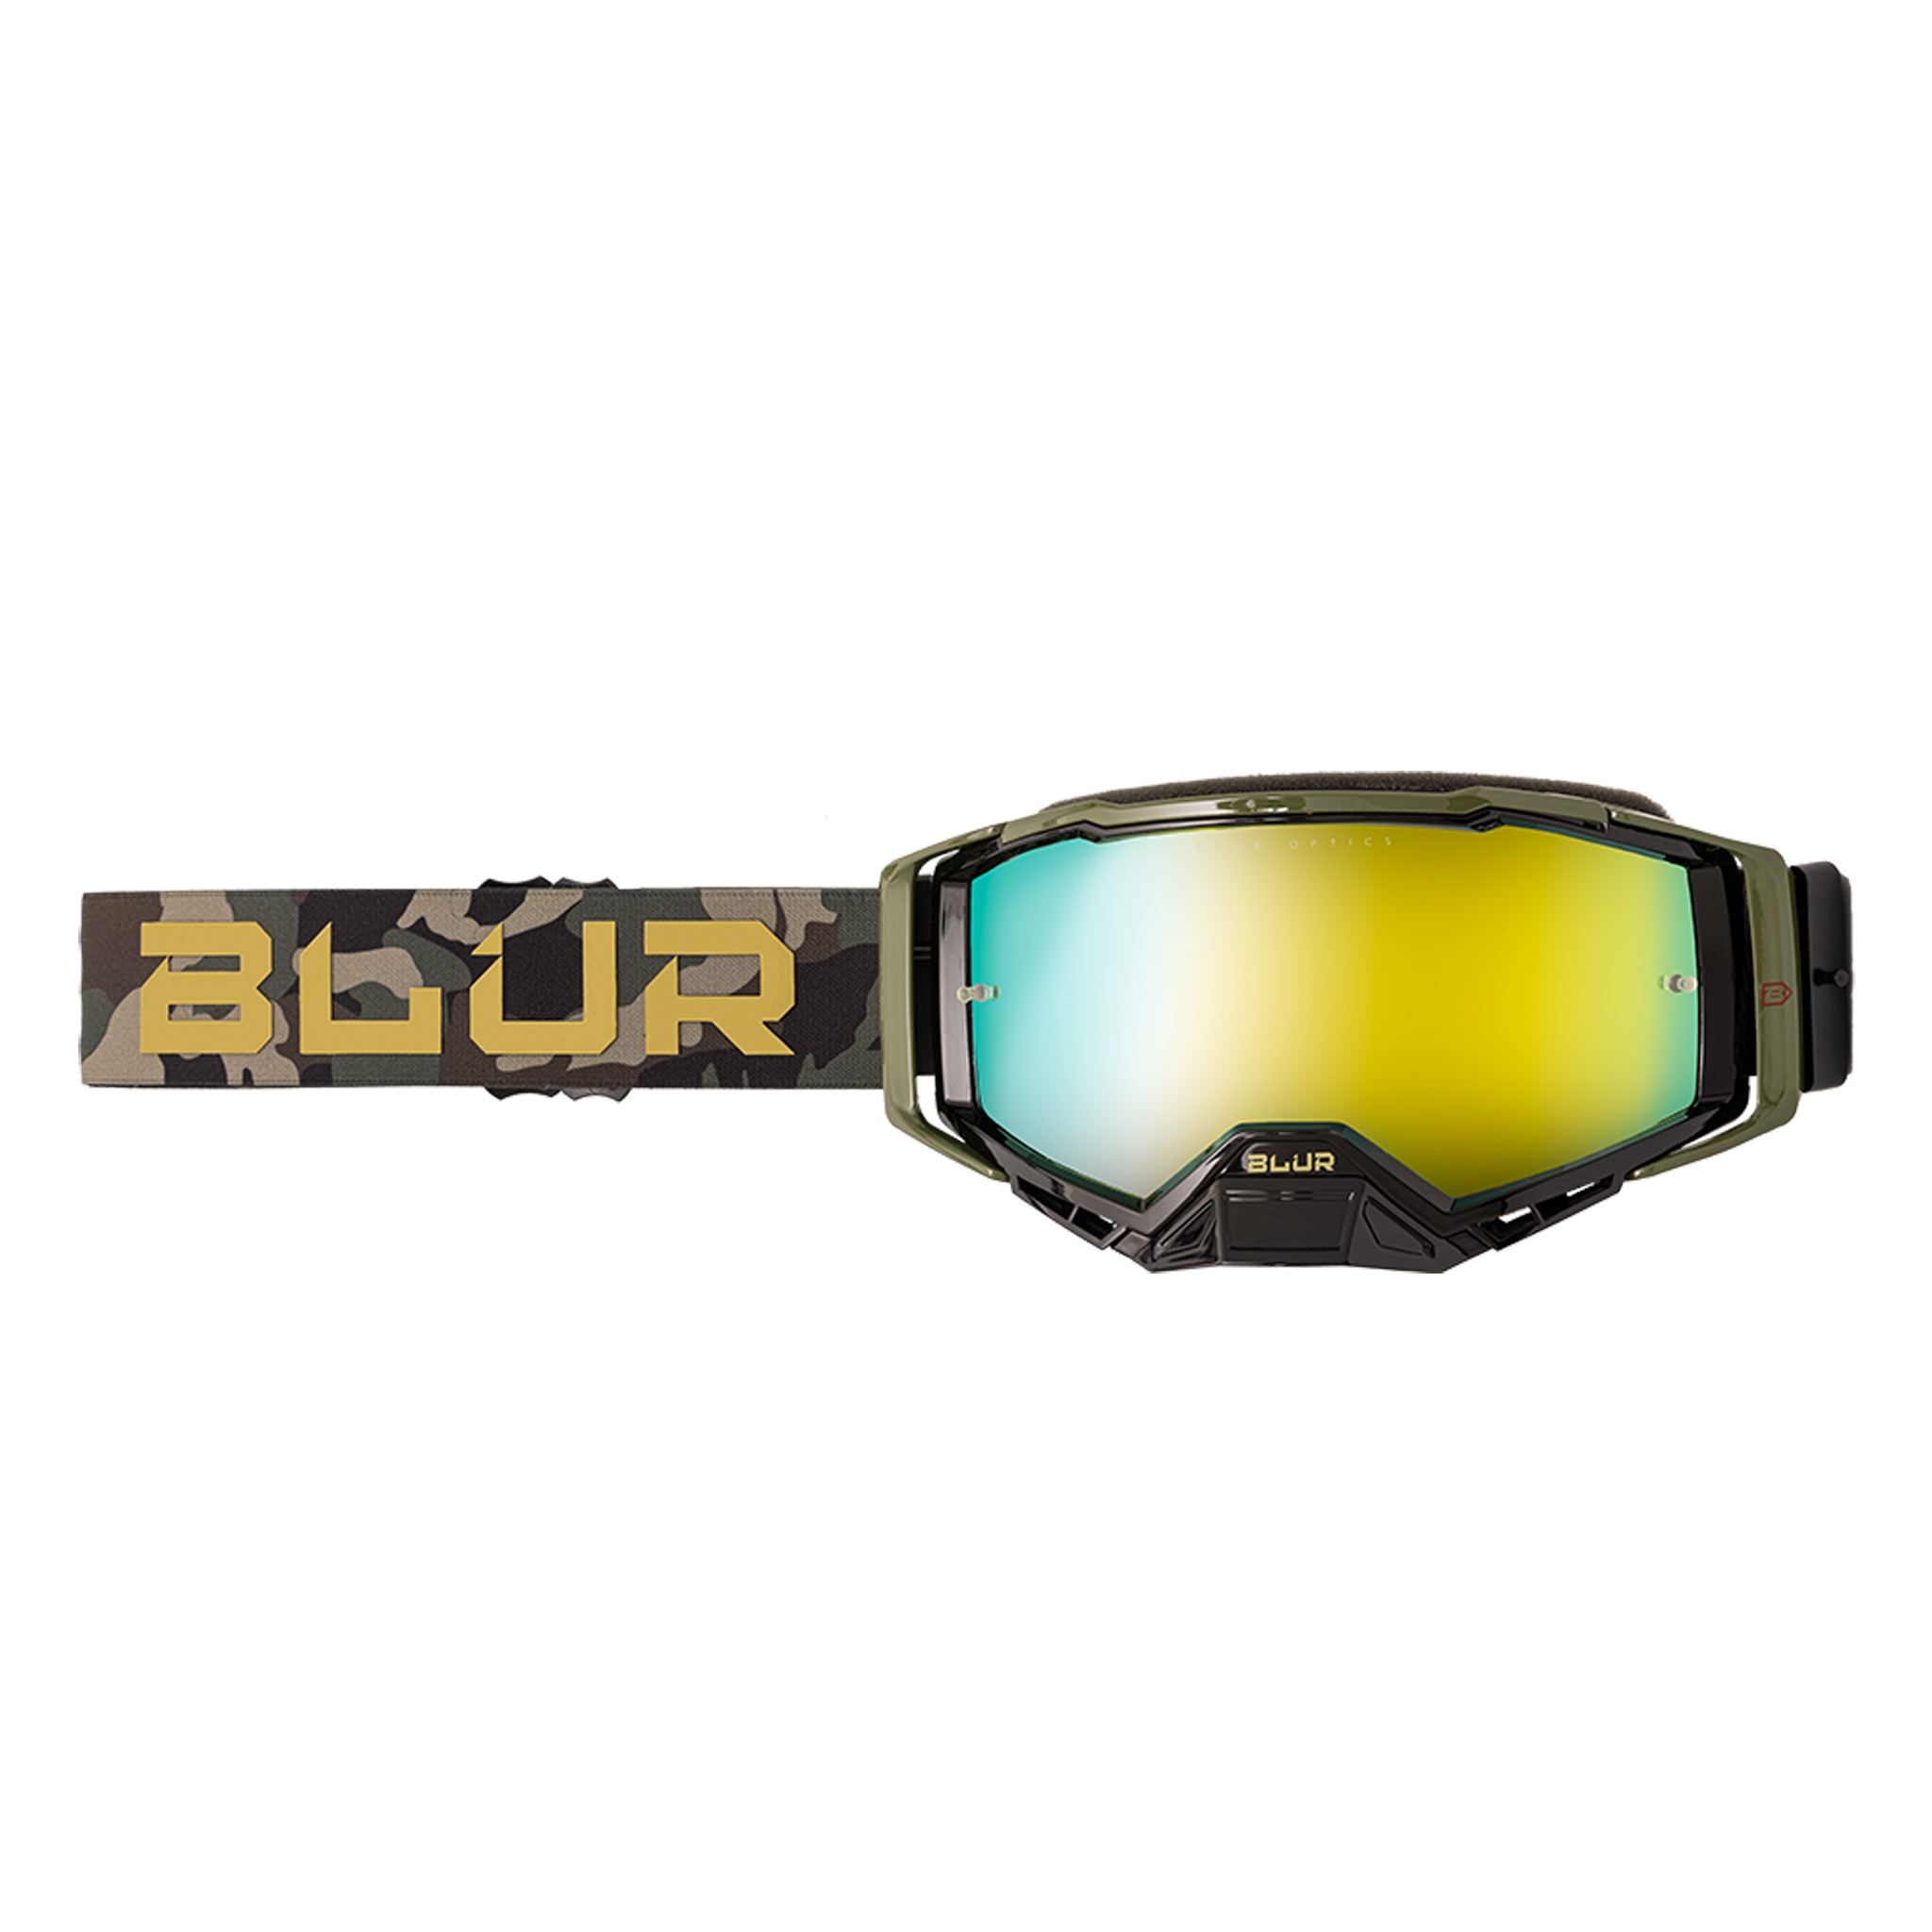 Blur Goggles B40 Goggle, Black/Camo, Radium Gold Lens